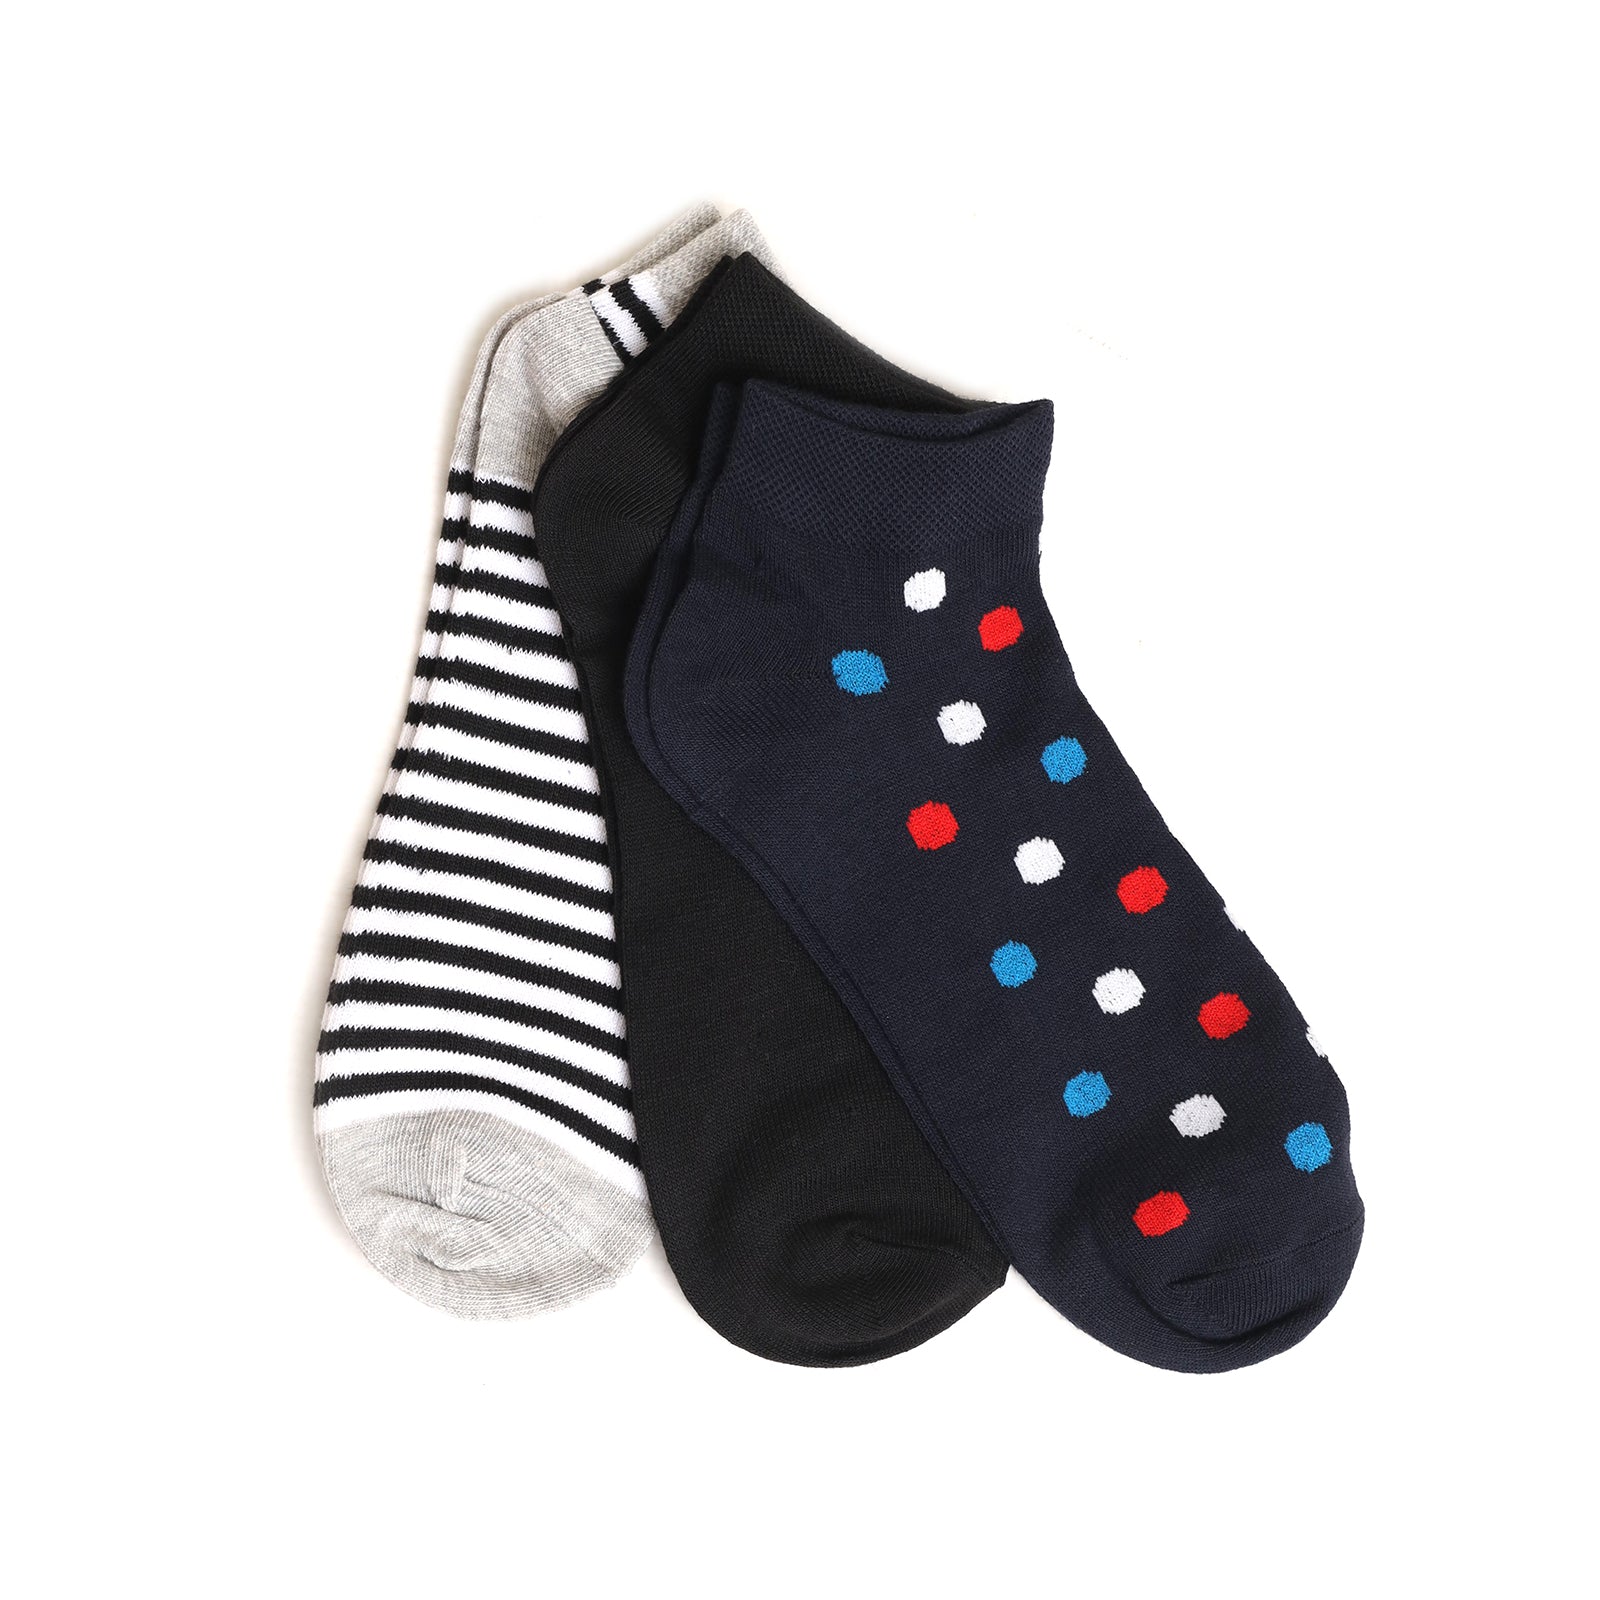 A-SB-0300153- Socks